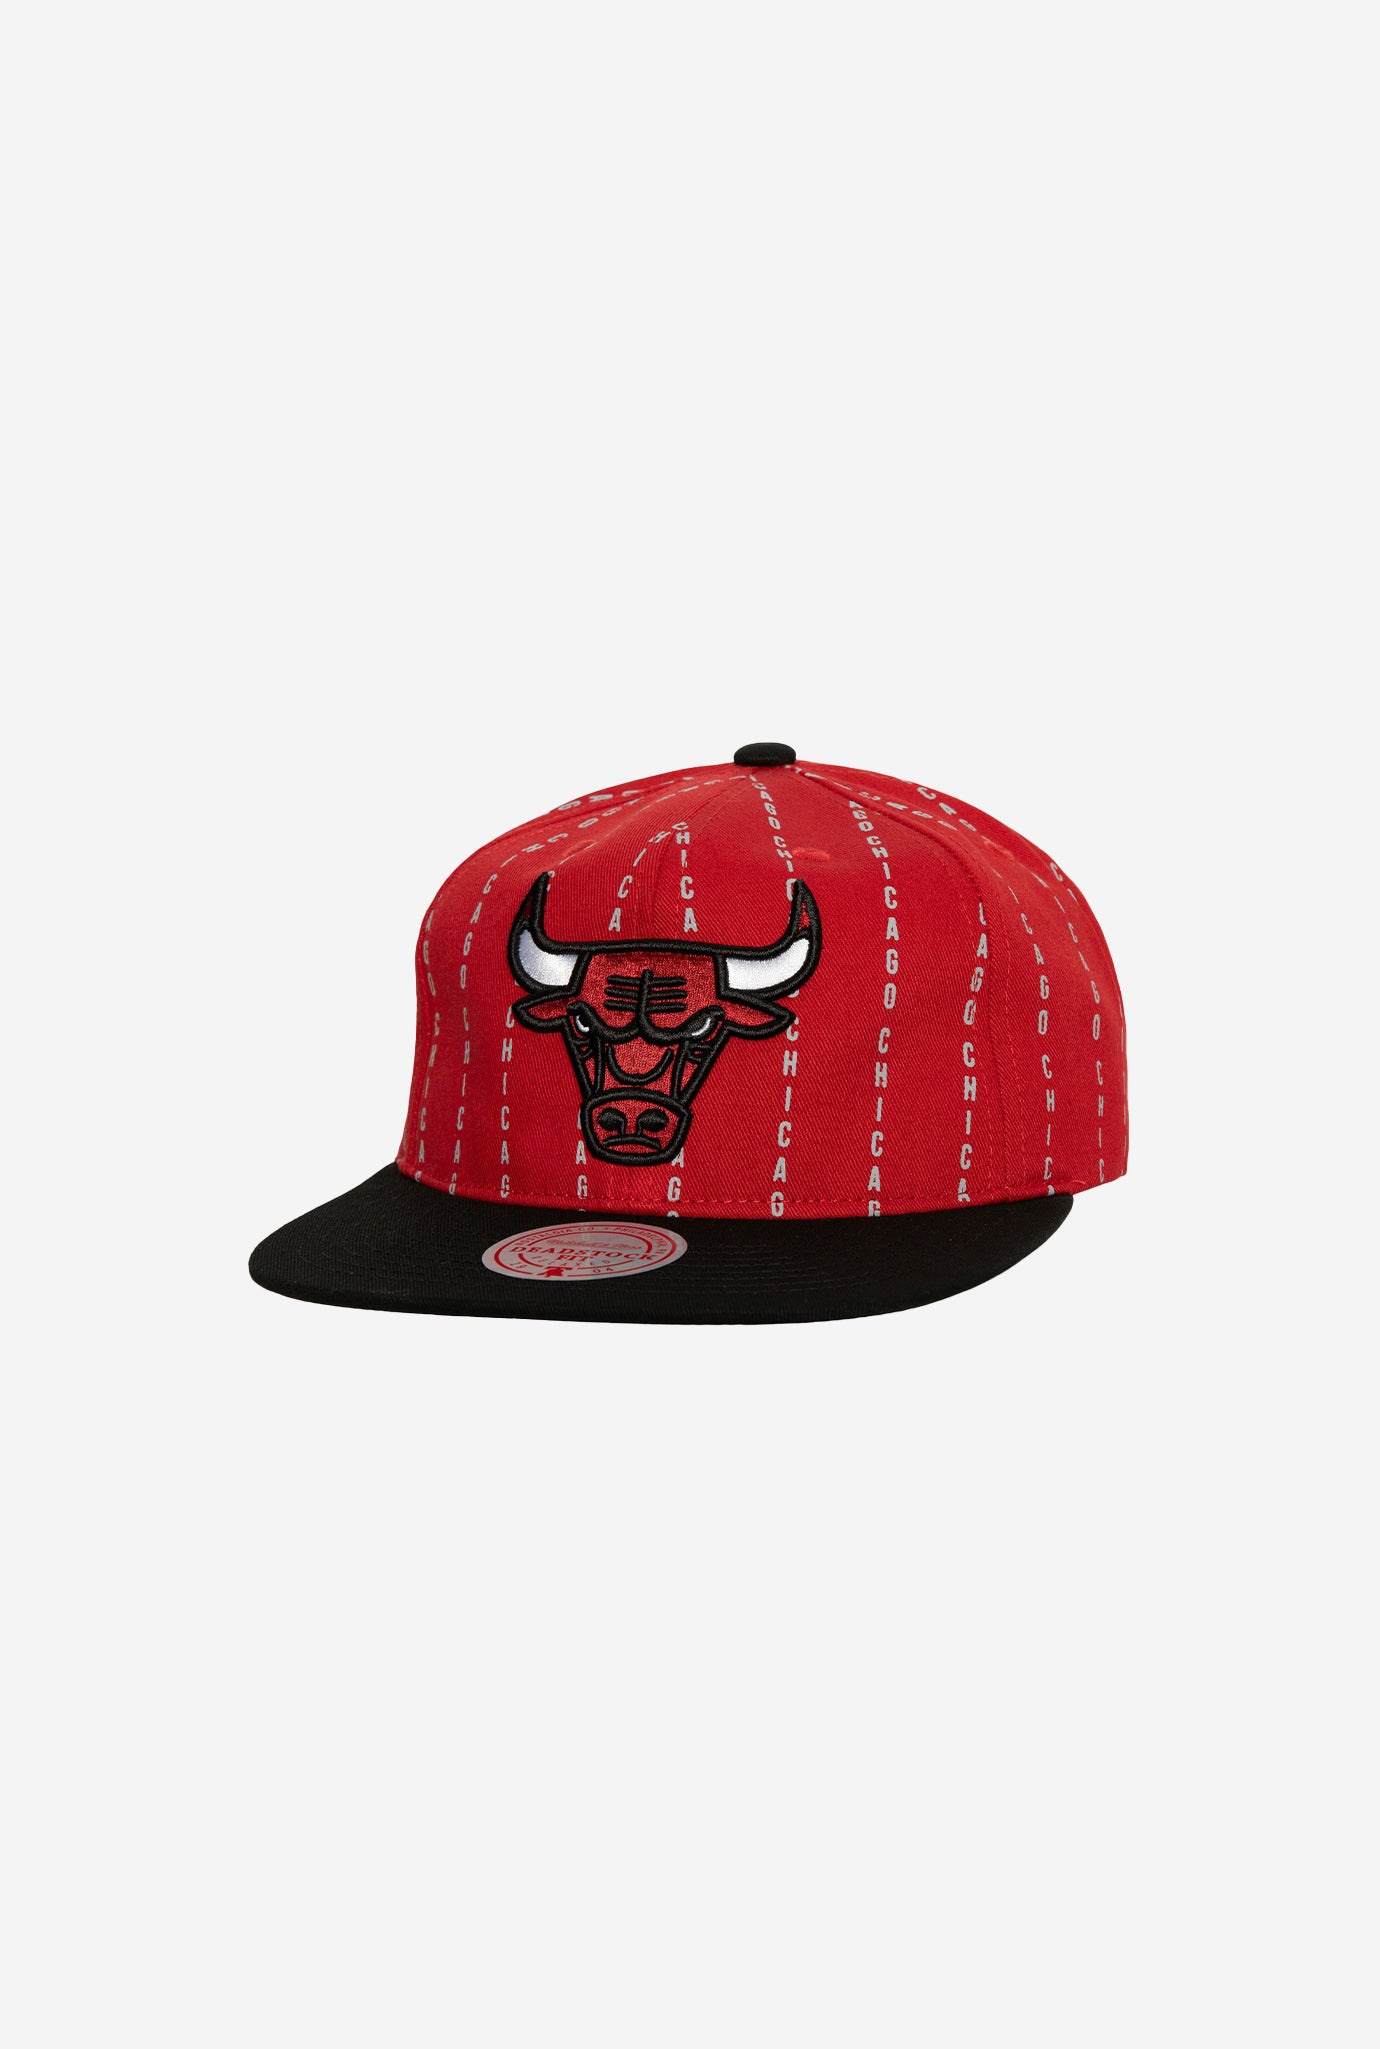 Chicago Bulls City Pinstripe Deadstock Snapback - Red